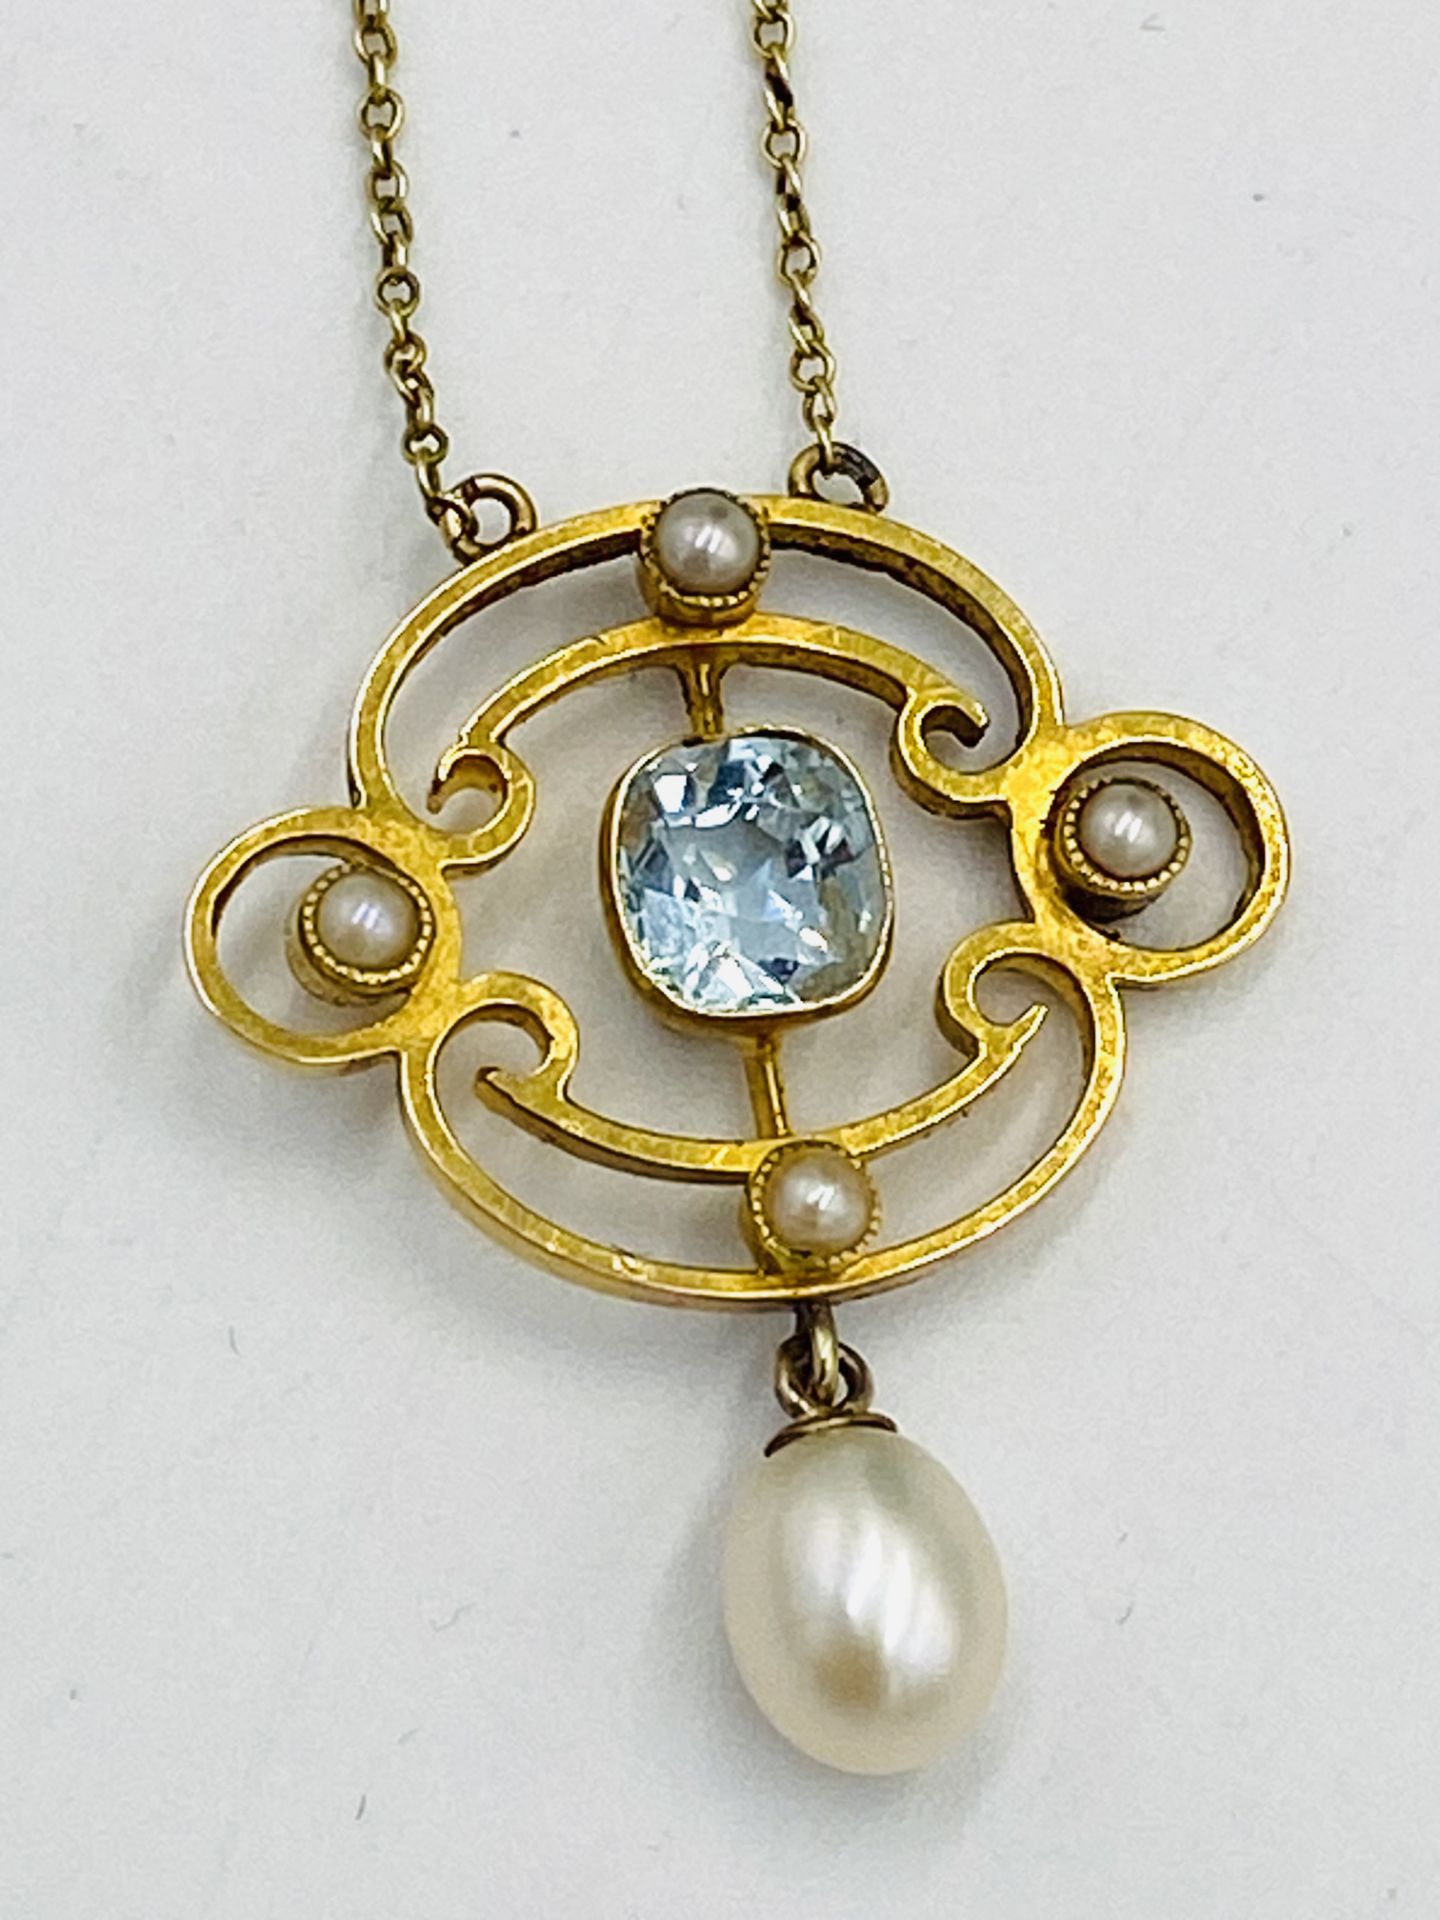 15ct gold pendant necklace